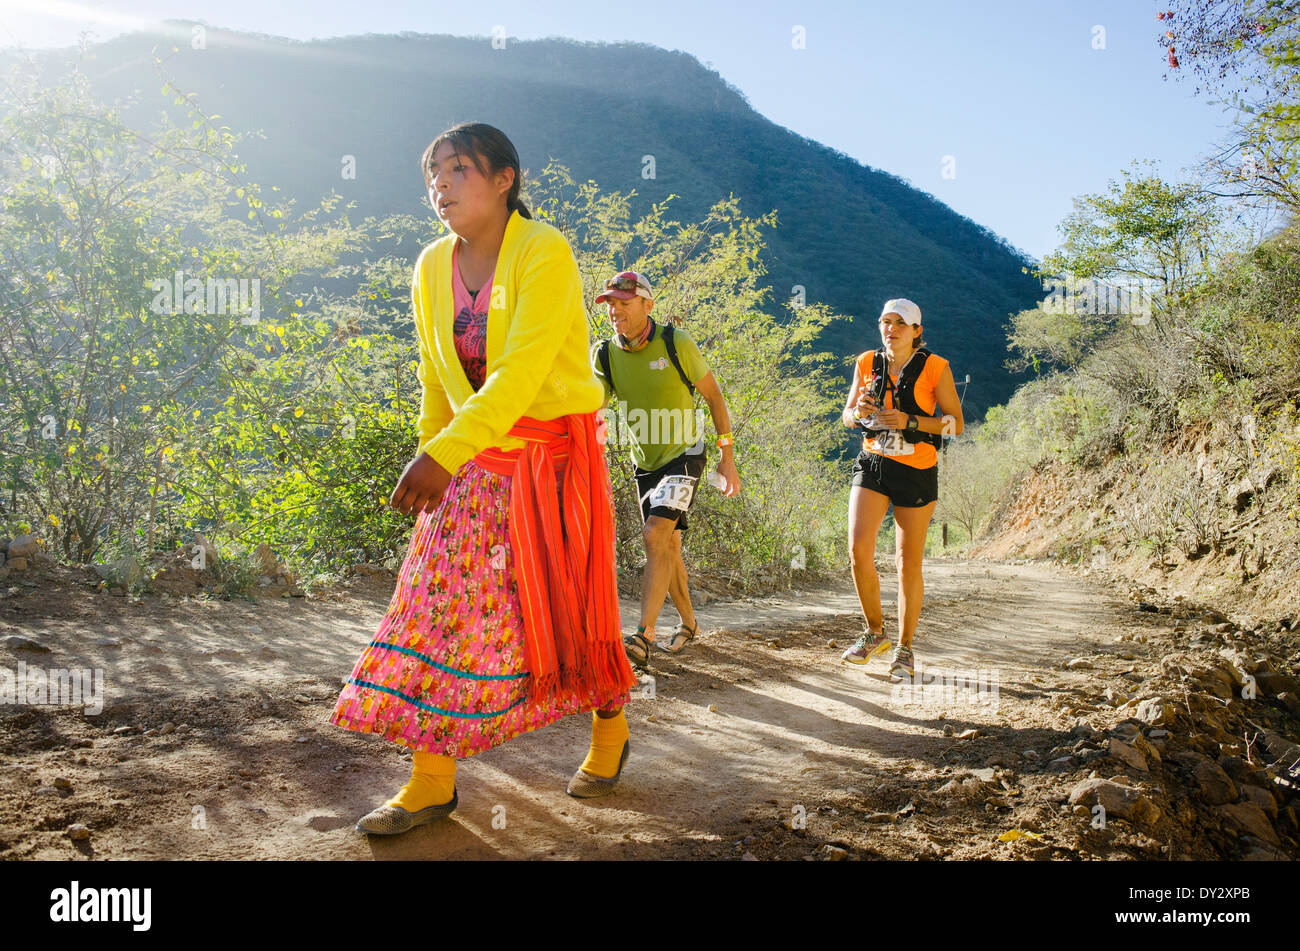 Copper Canyon Ultramarathon (Ultra Caballo Blanco), Chihuahua, Mexiko. Stockfoto